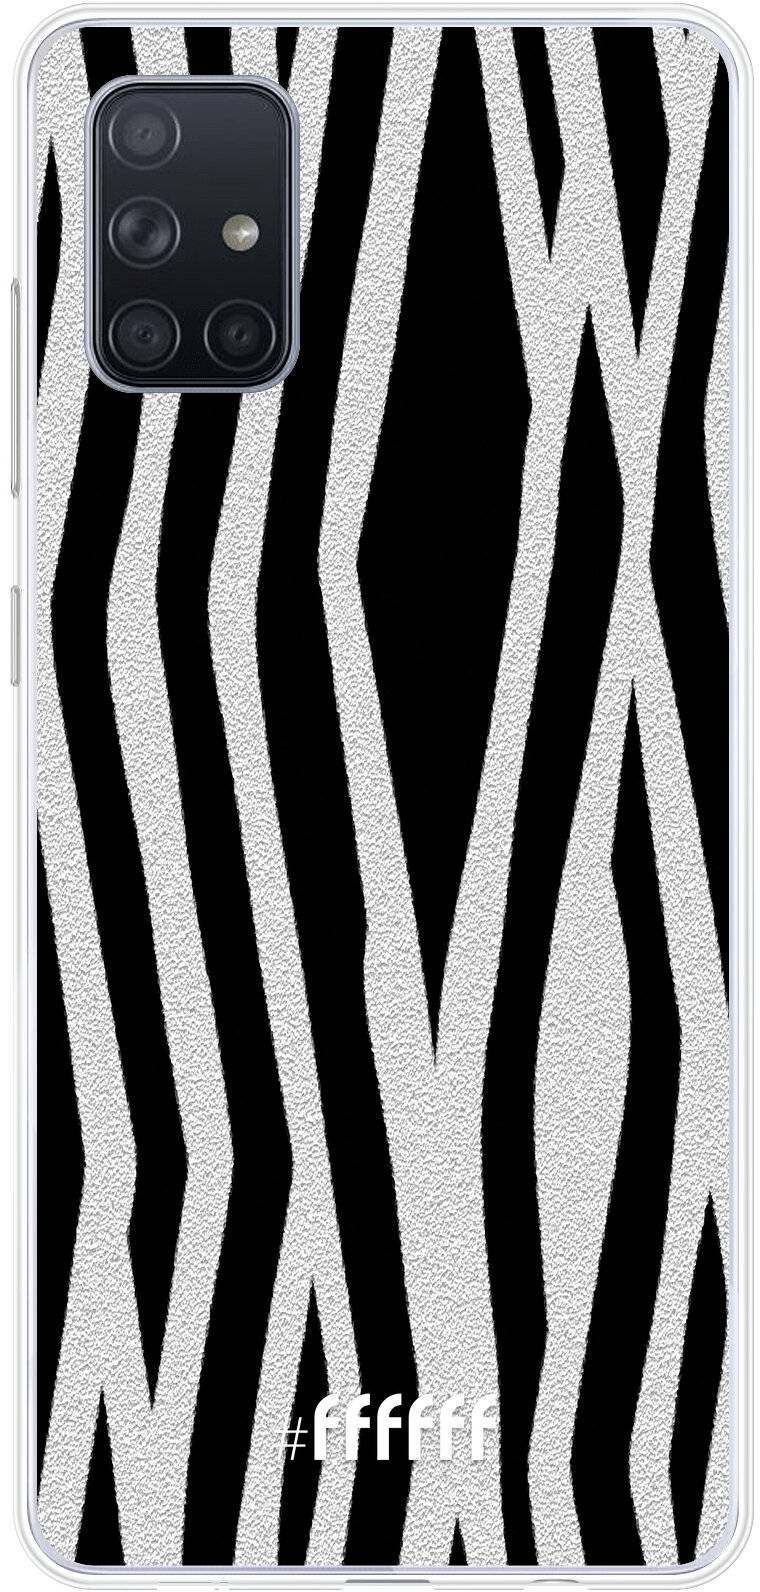 Zebra Print Galaxy A71